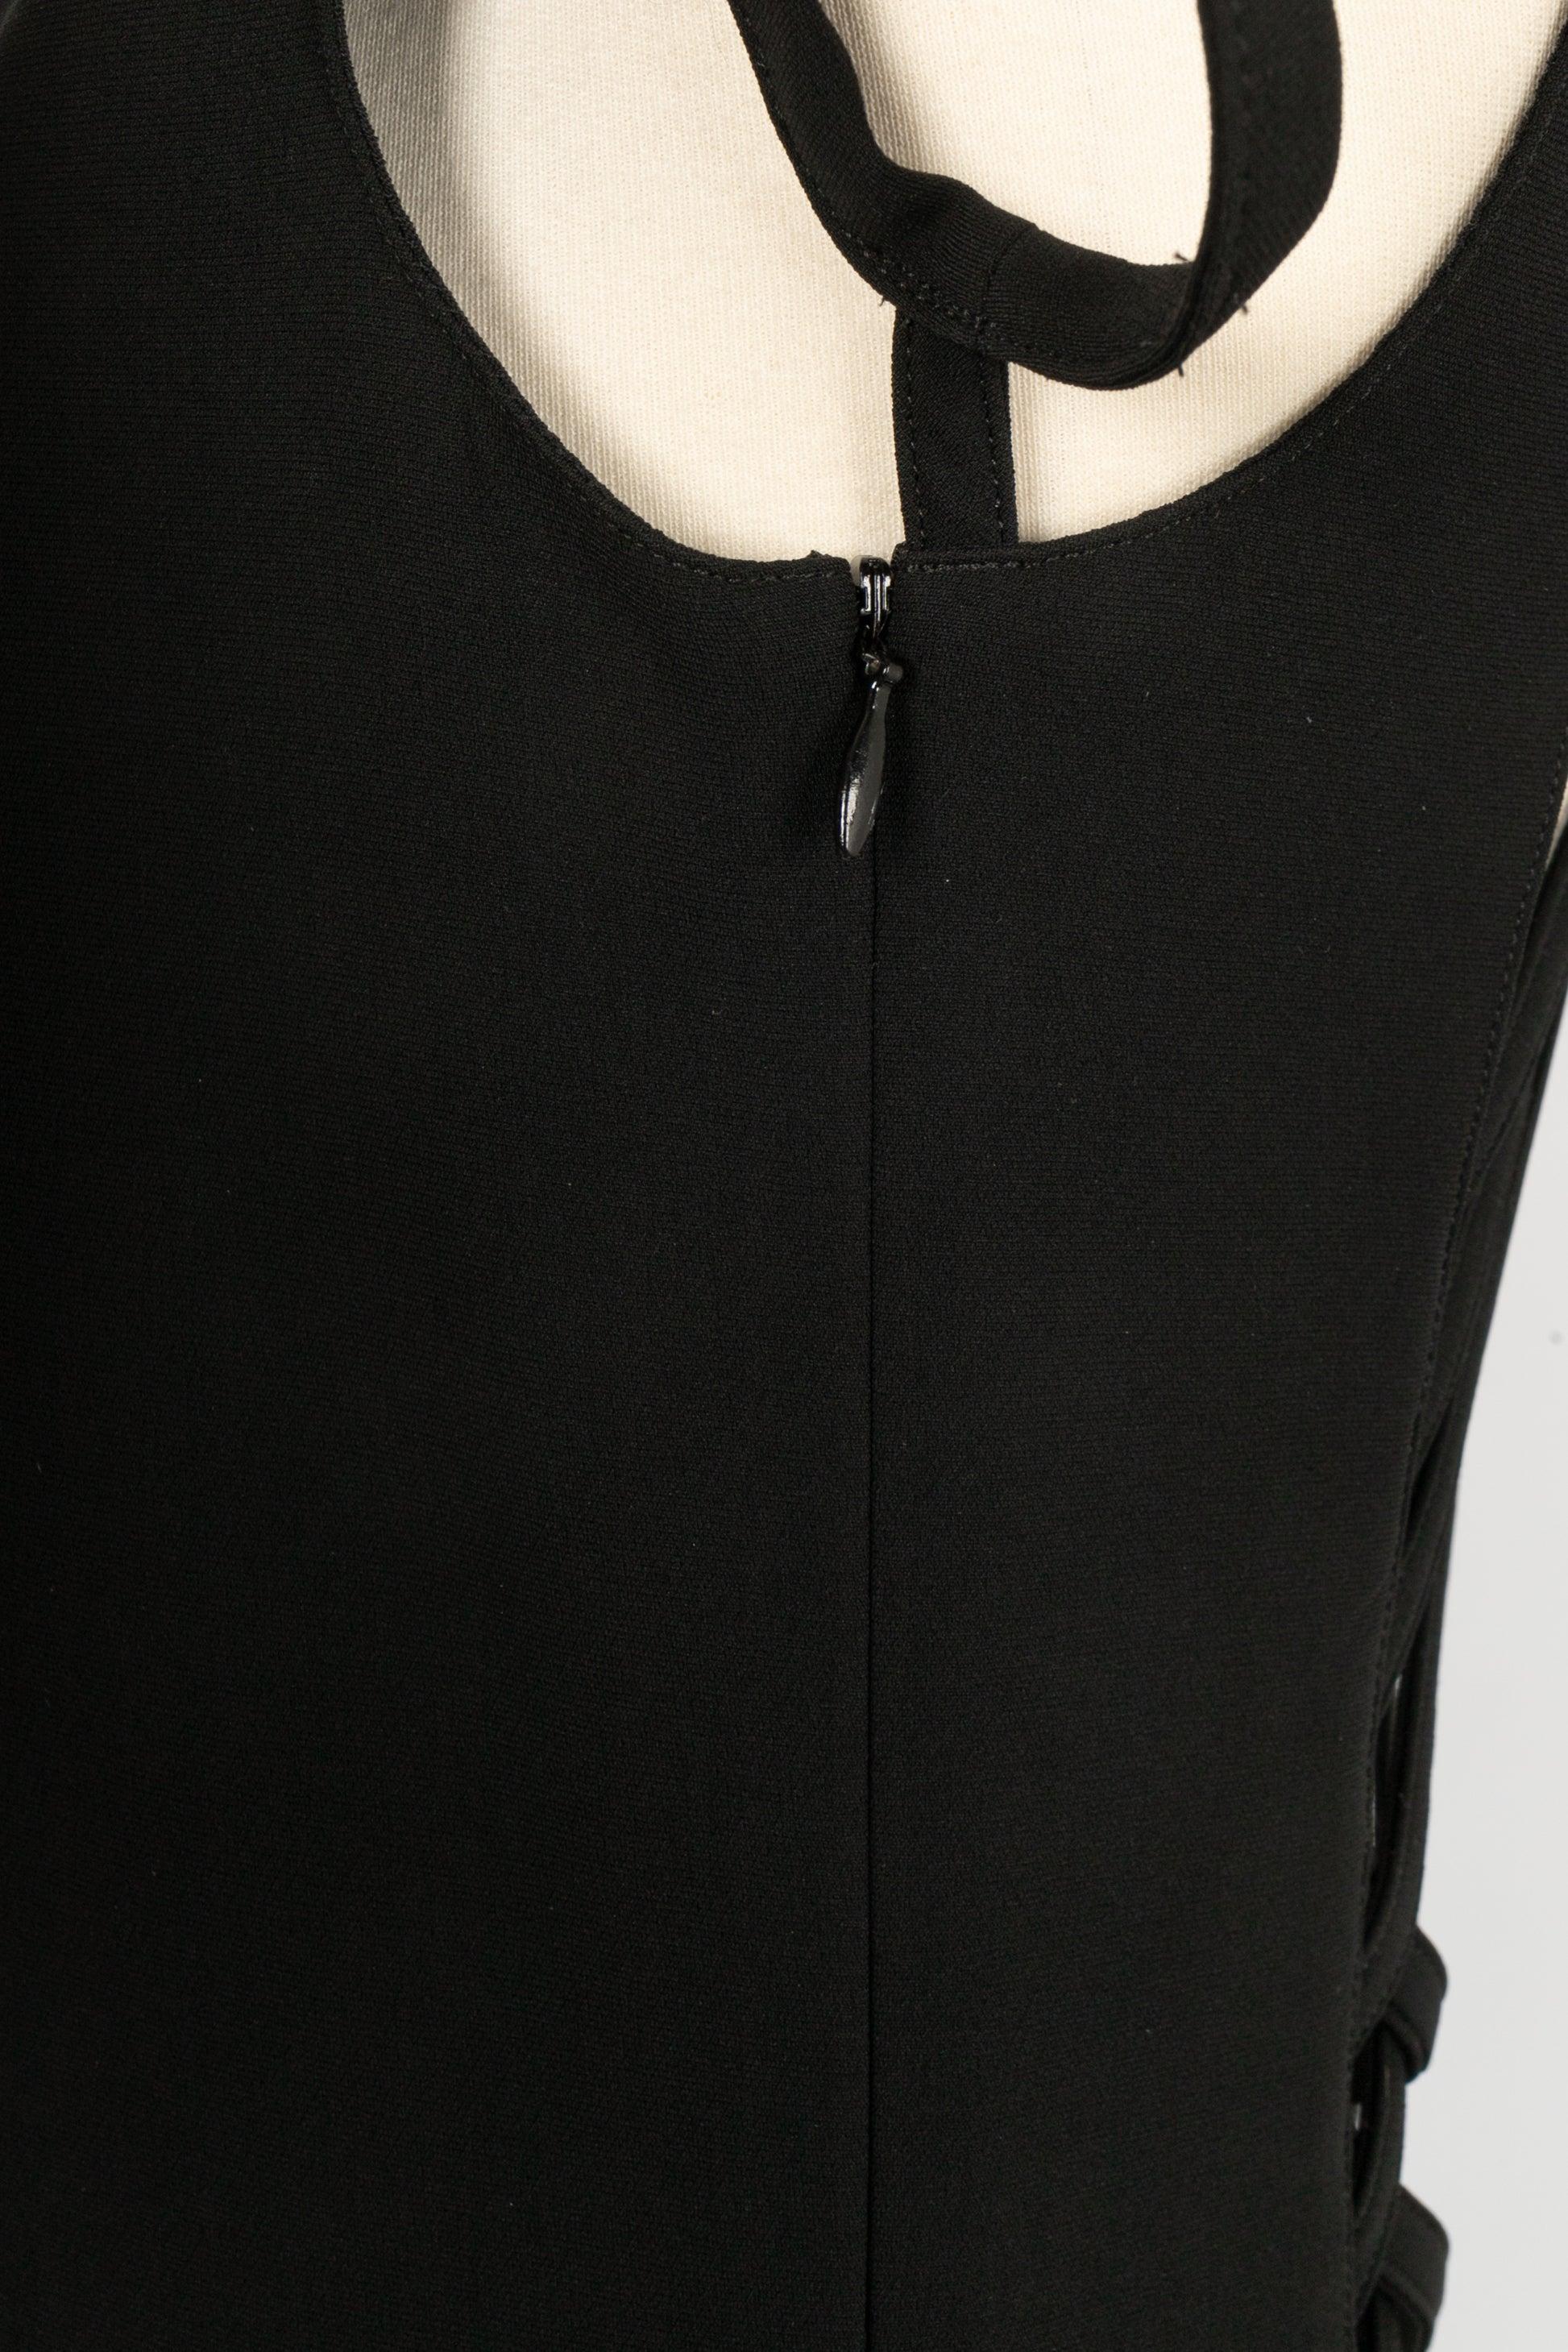 Jean Paul Gaultier Black Long Dress Resort Collection 36FR, 2011 4